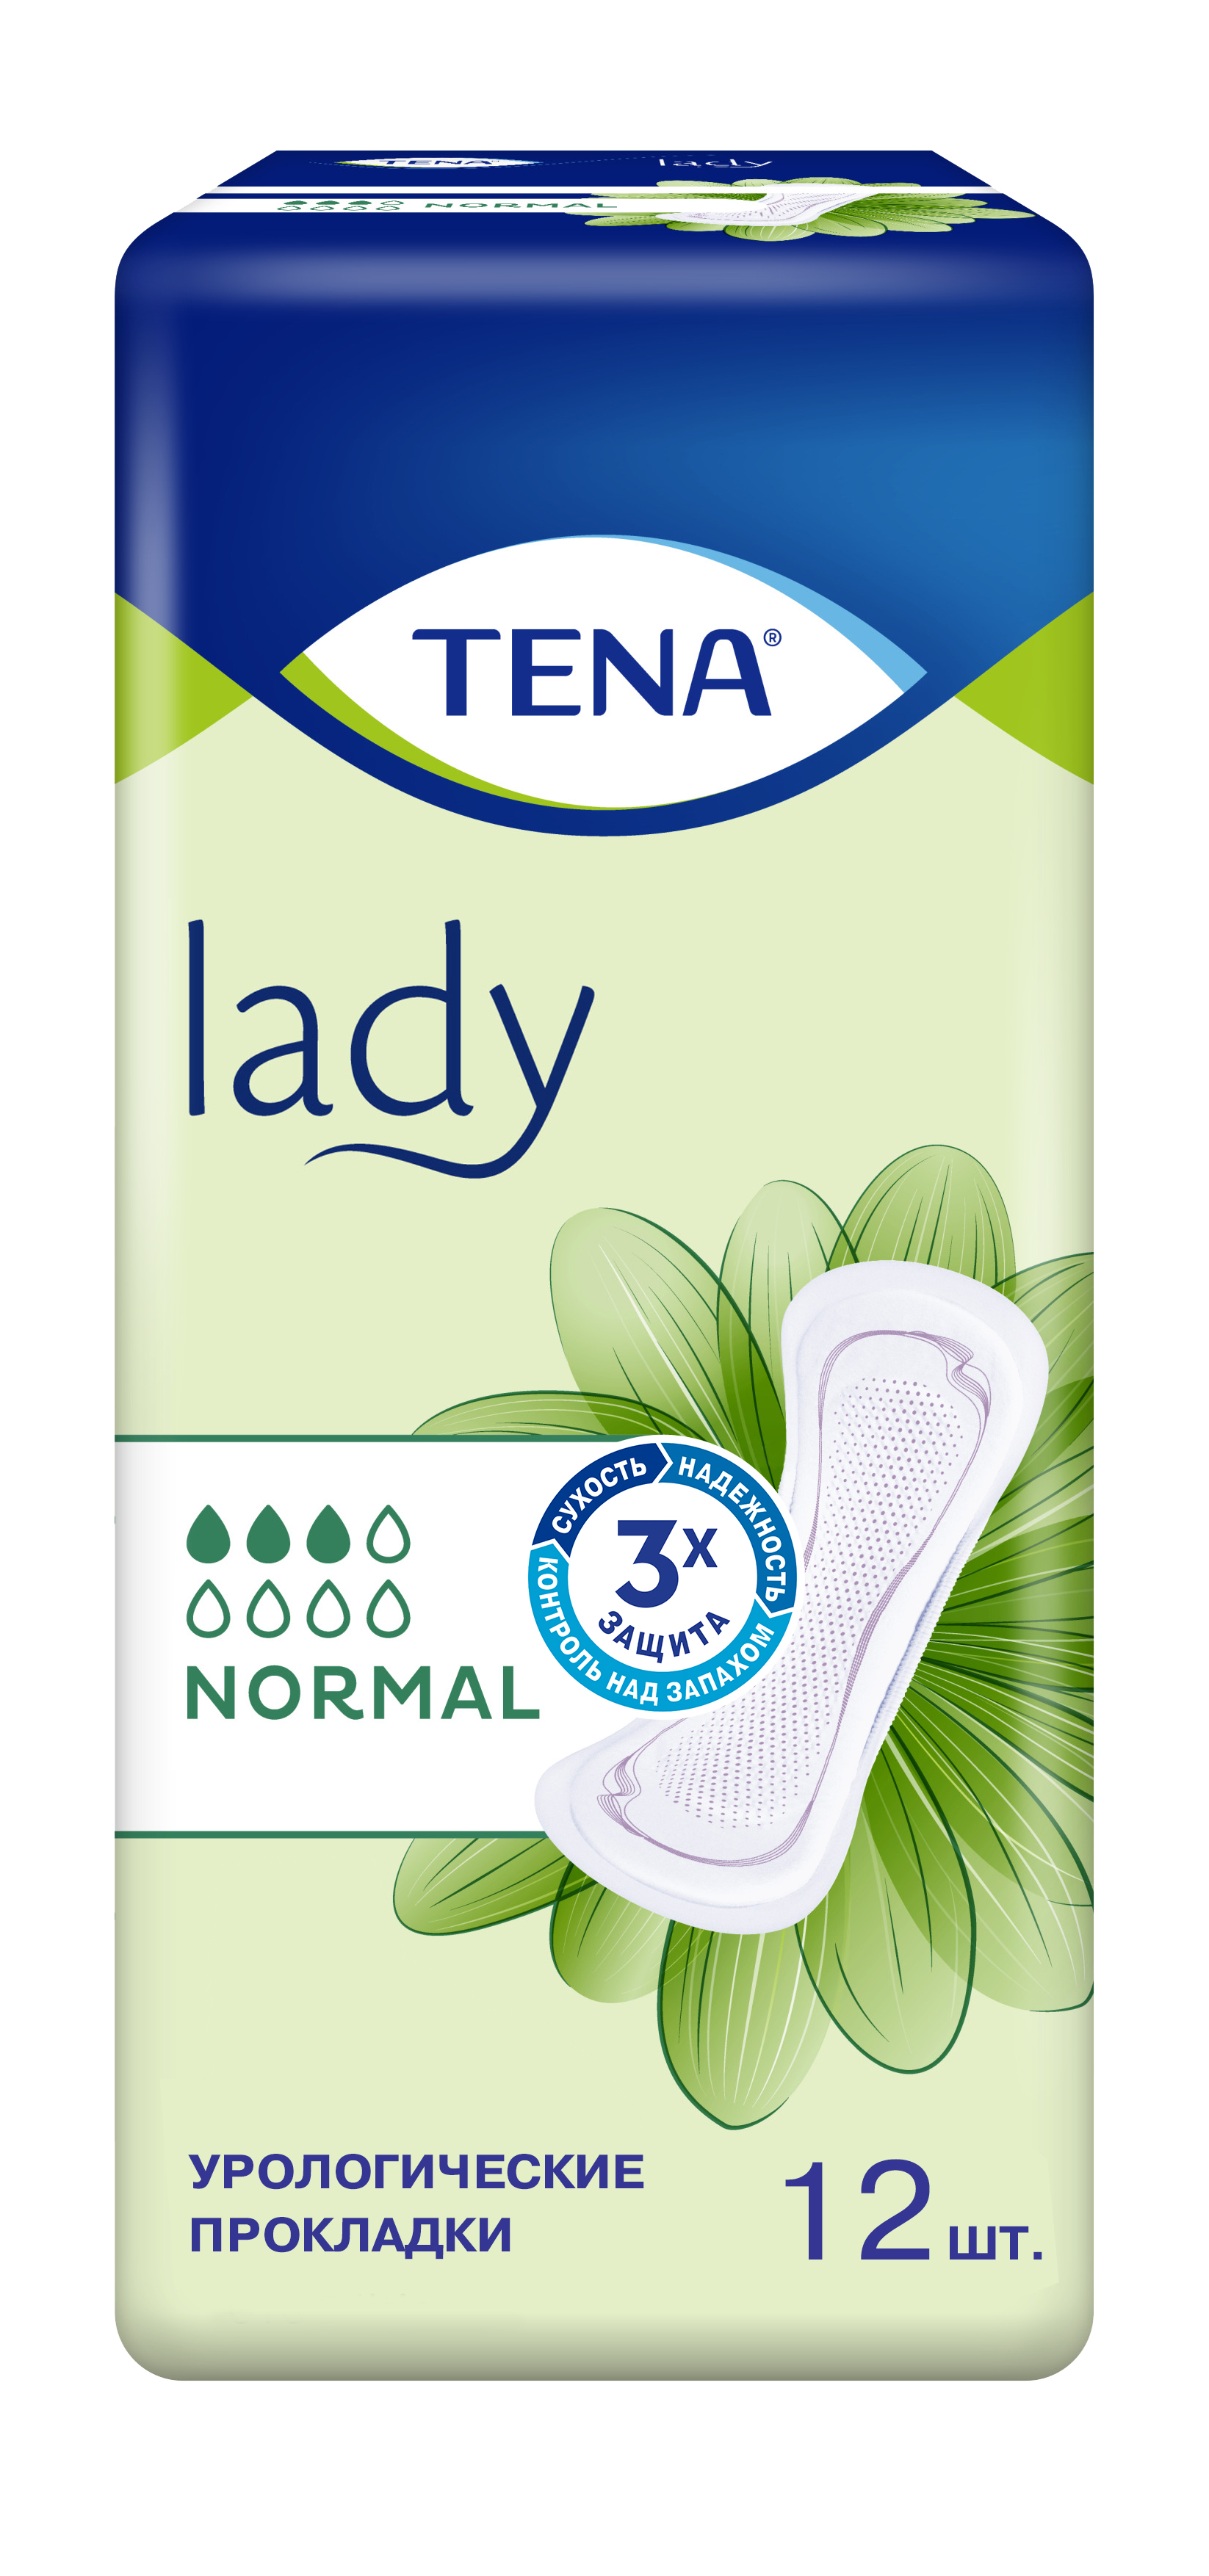 TENA Lady Normal  прокладки, 12 шт. тена lady прокладки урологические слим экстра плюс 8 шт